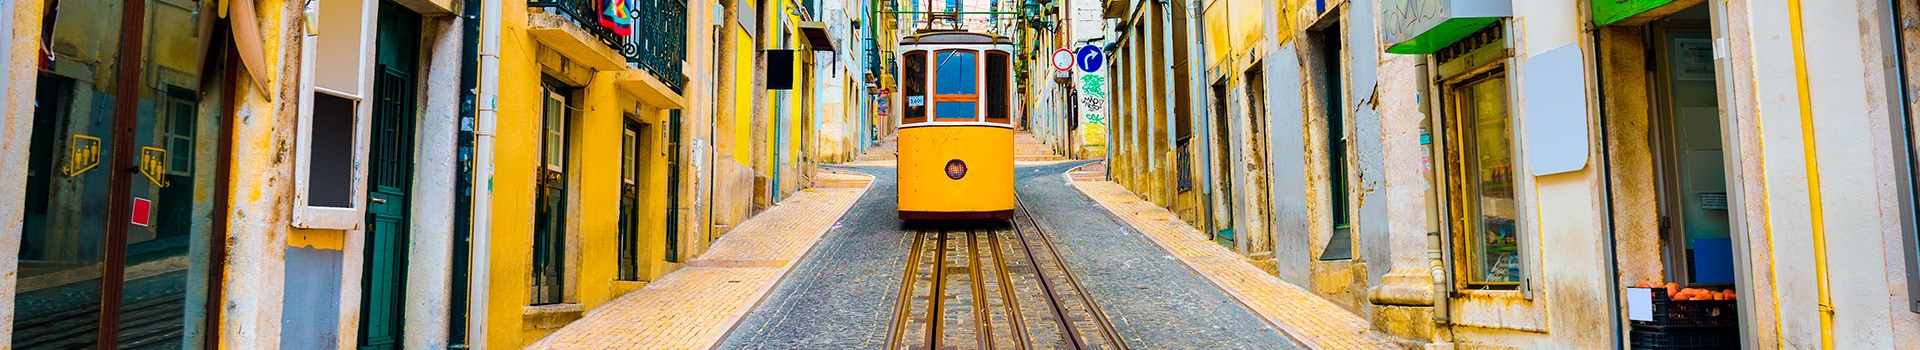 São Miguel - Lisbon